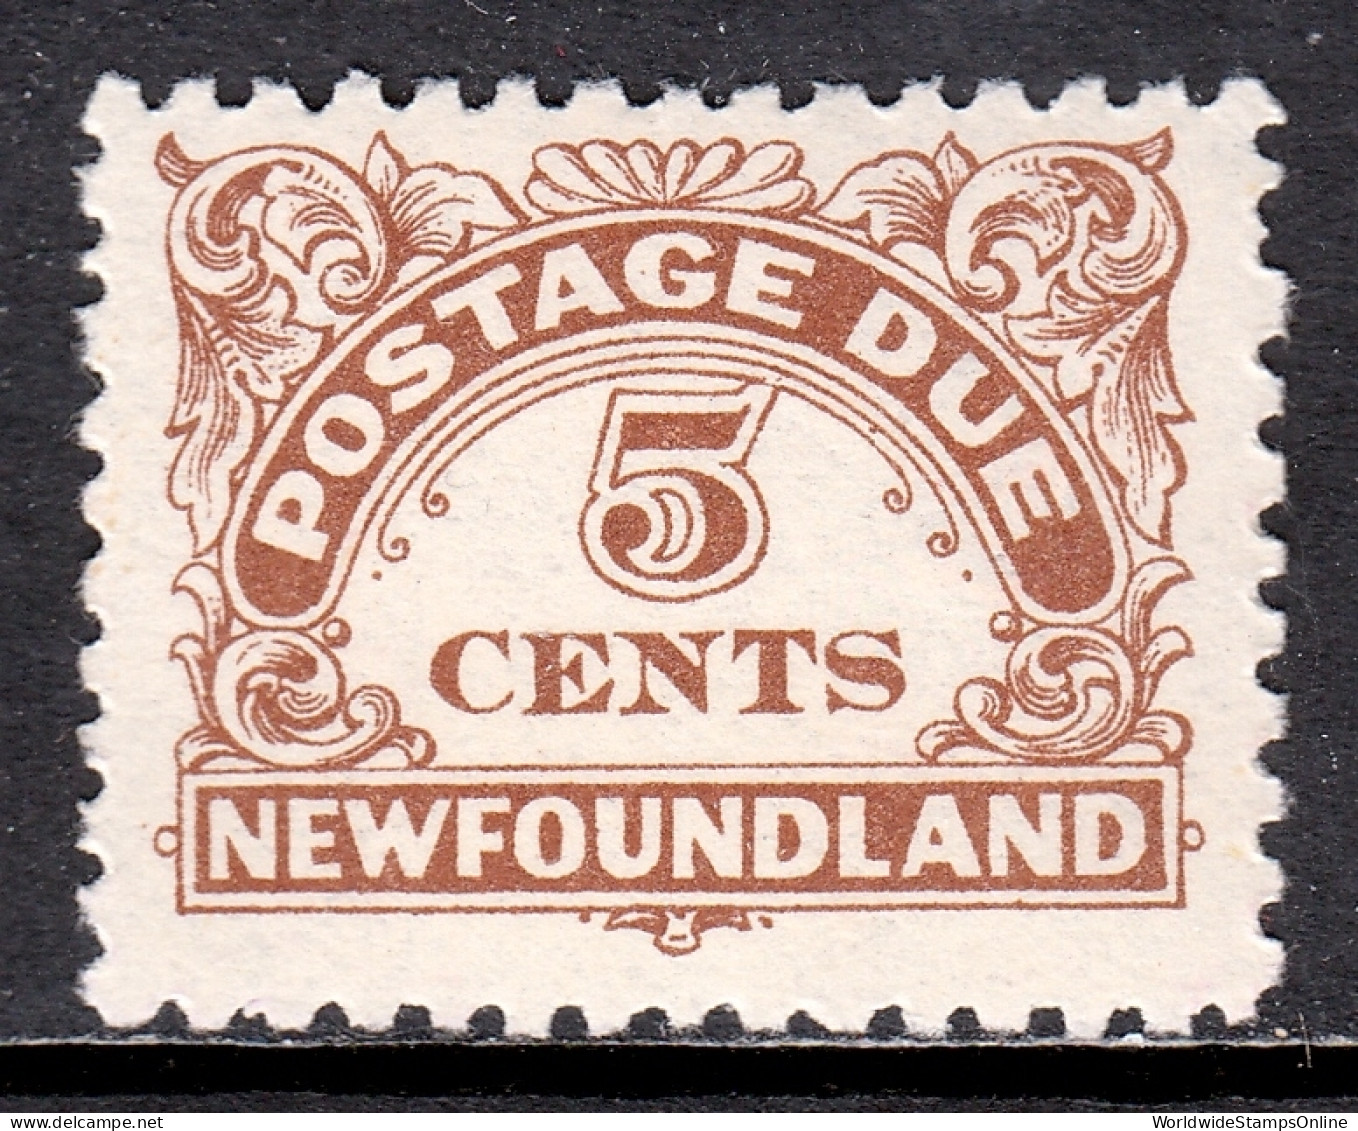 Newfoundland - Scott #J5 - MLH - Very Minor Gum Bump - SCV $15 - Fine Di Catalogo (Back Of Book)